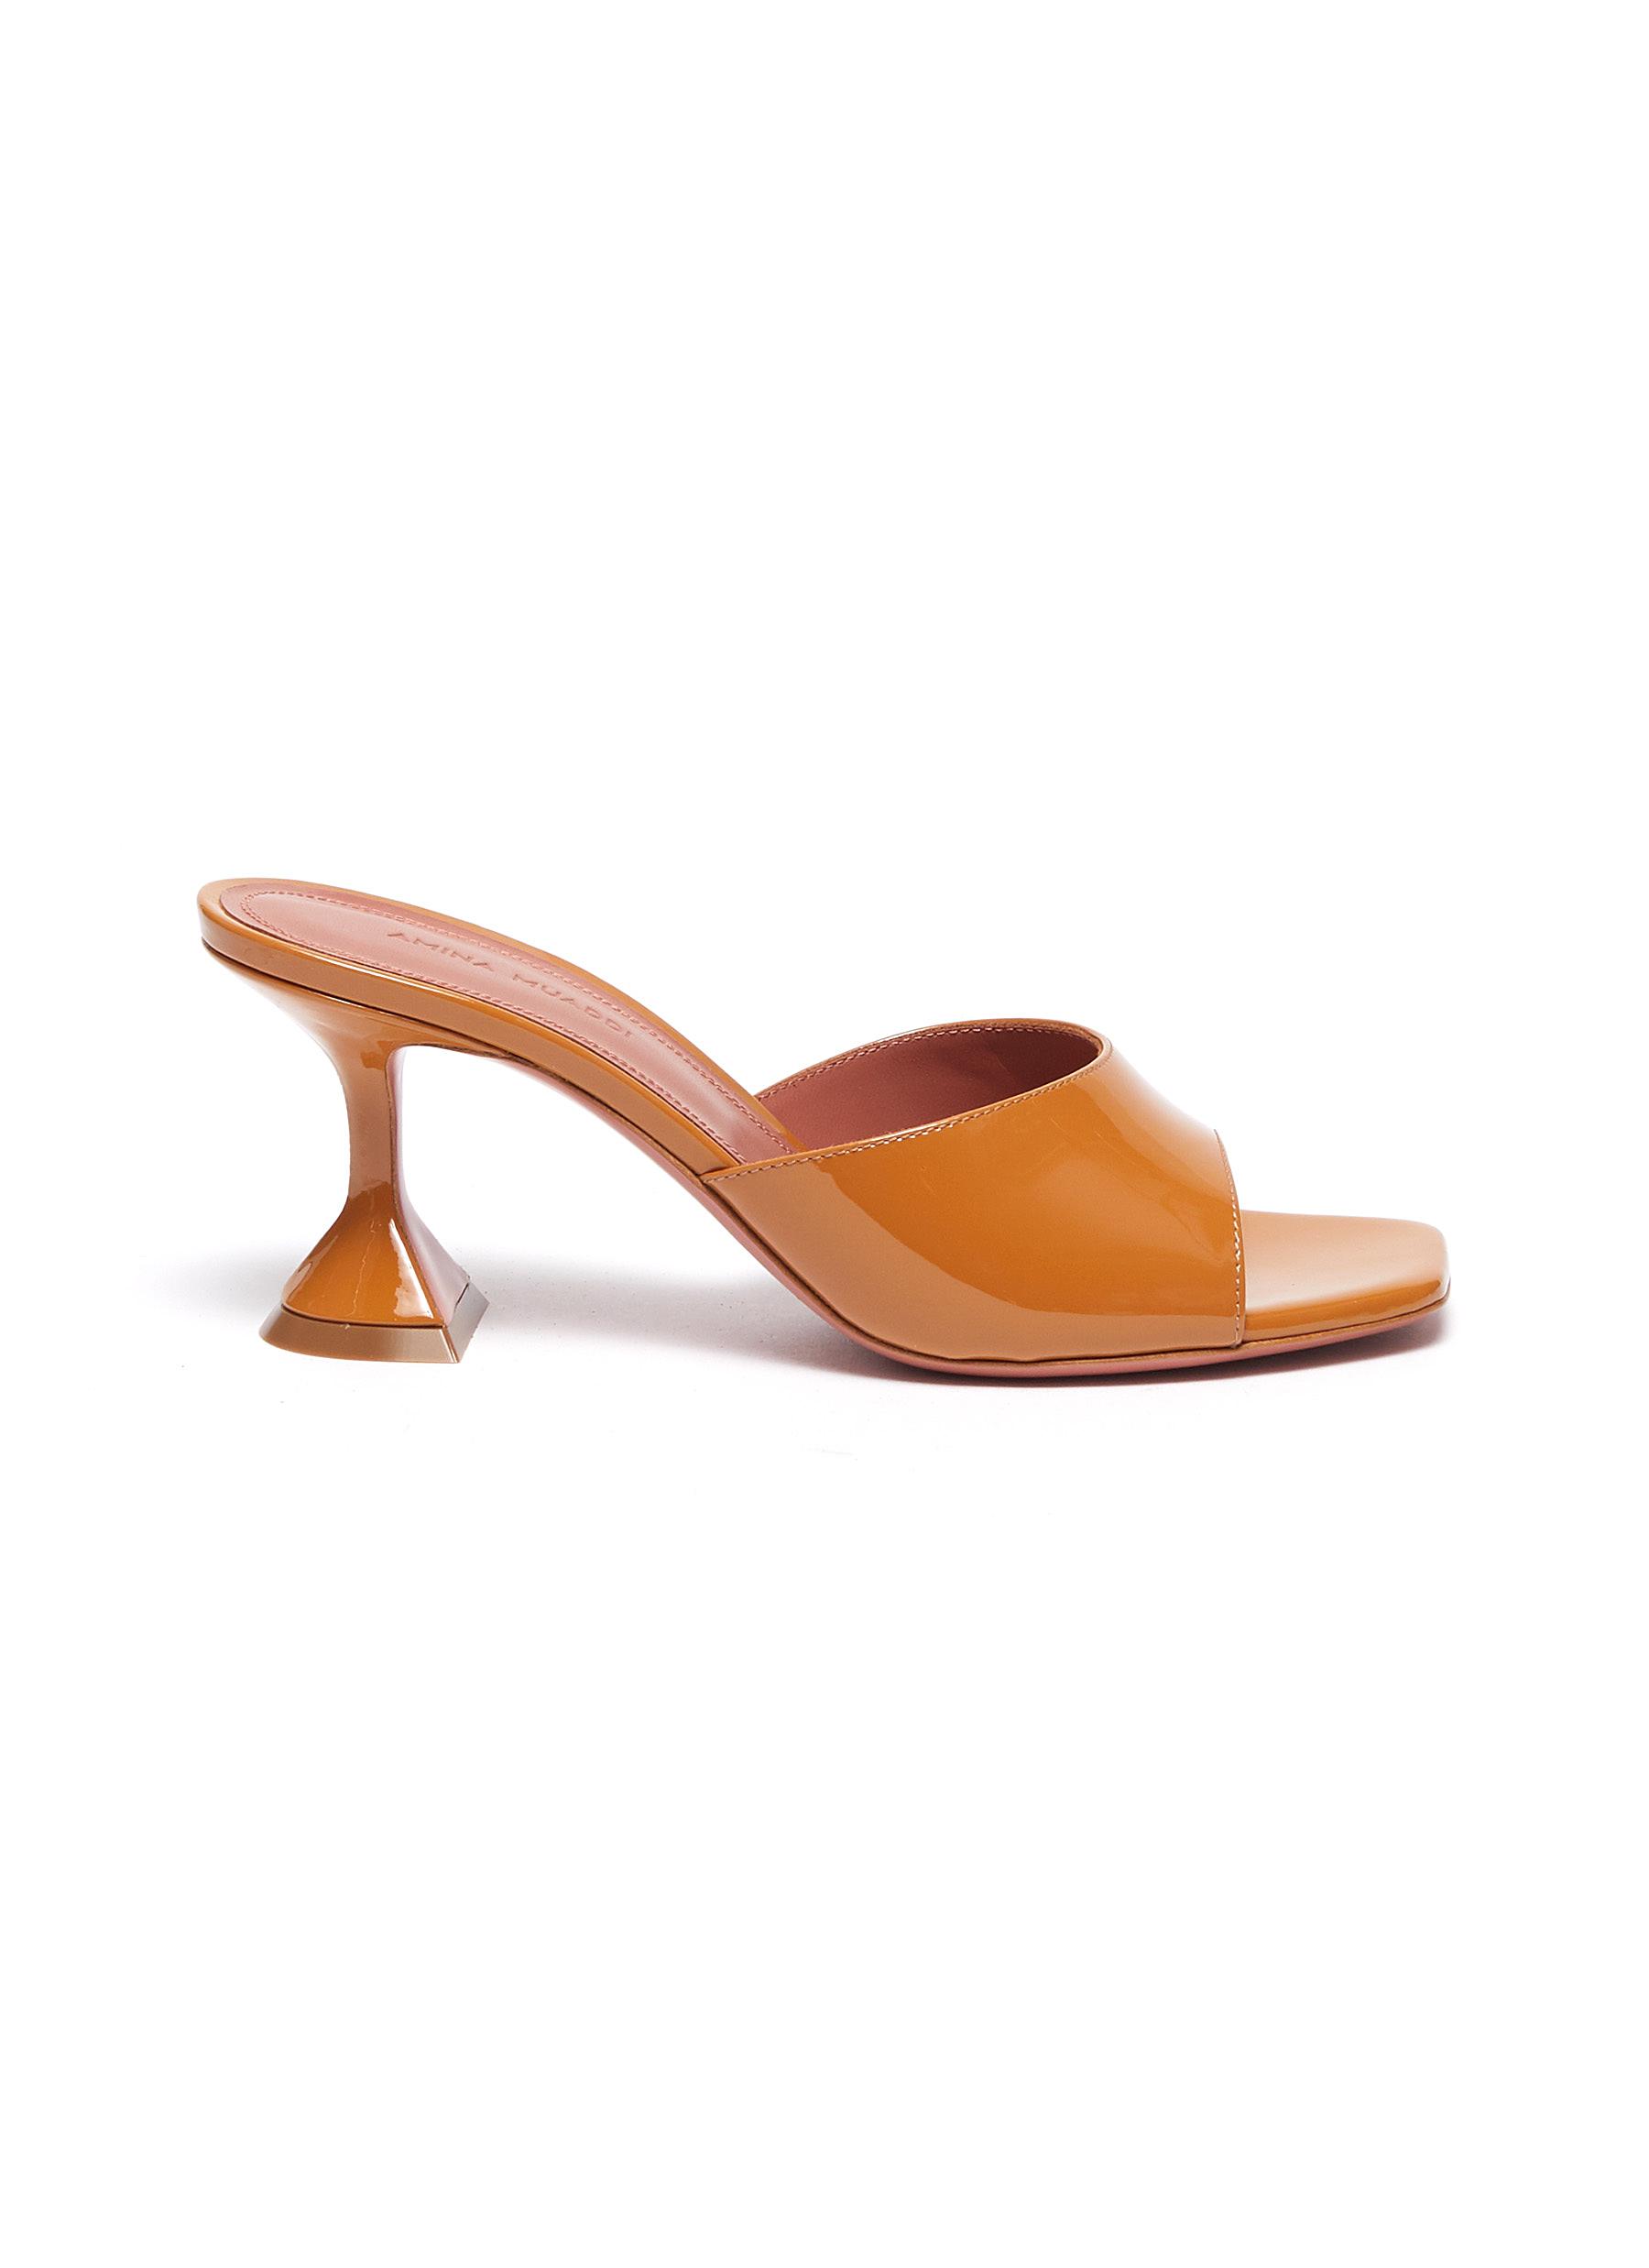 'Lupita' heeled leather sandals